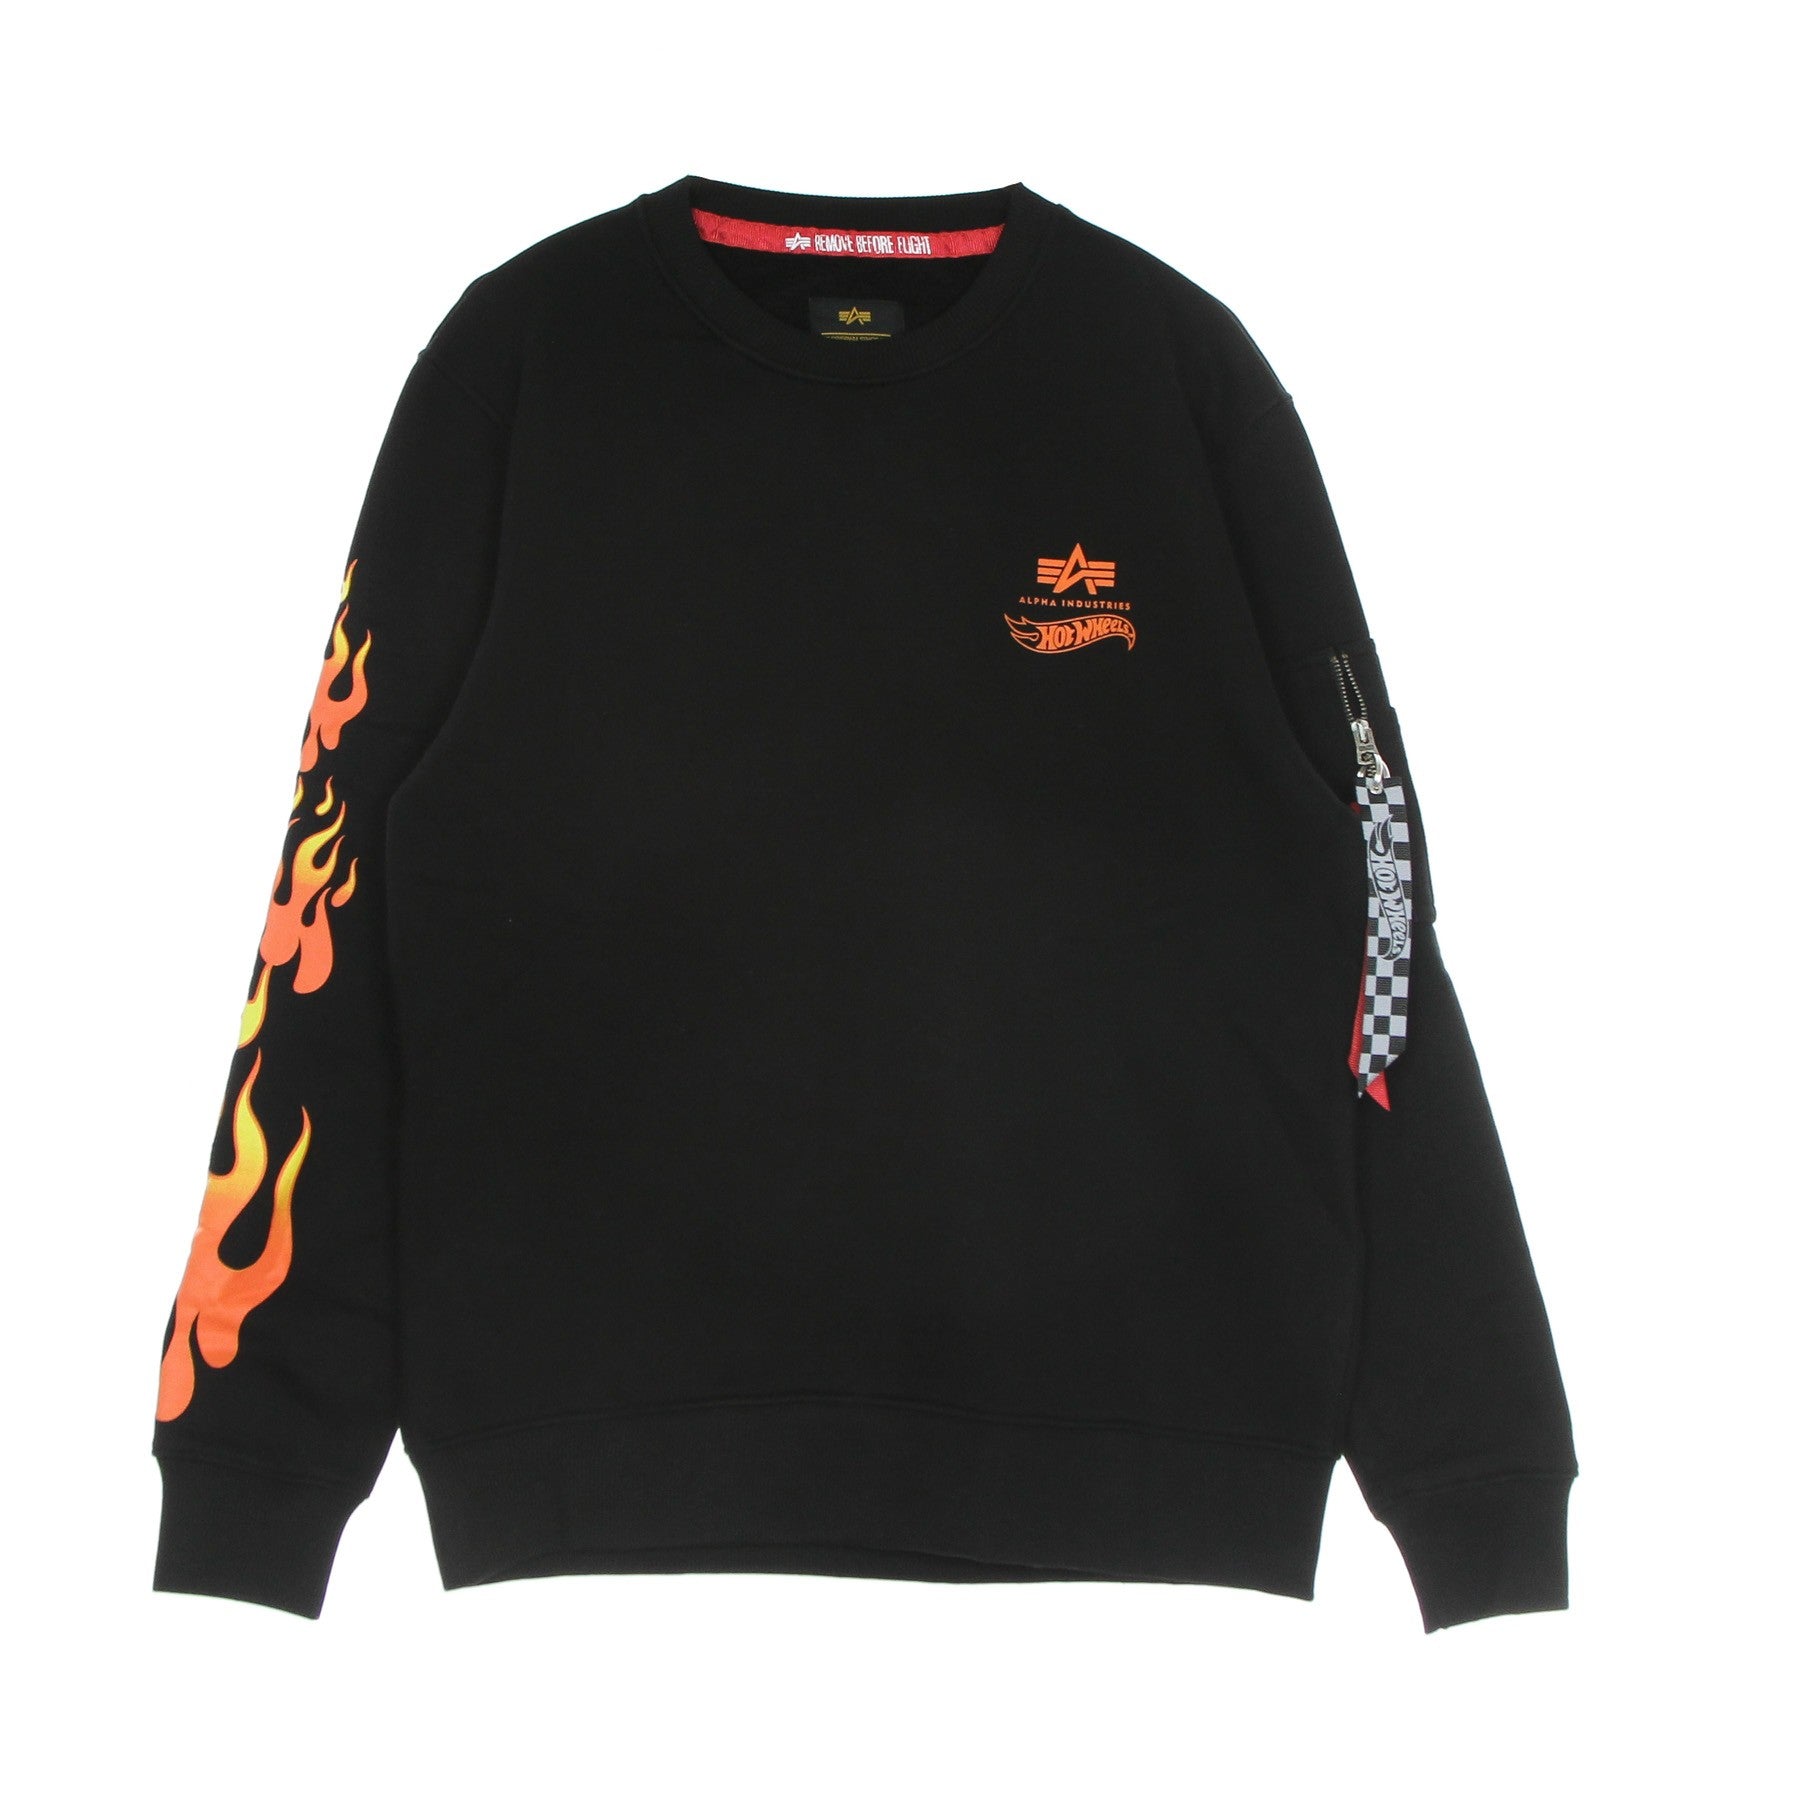 Flame Sweater X Hot Wheels Men's Crewneck Sweatshirt Black